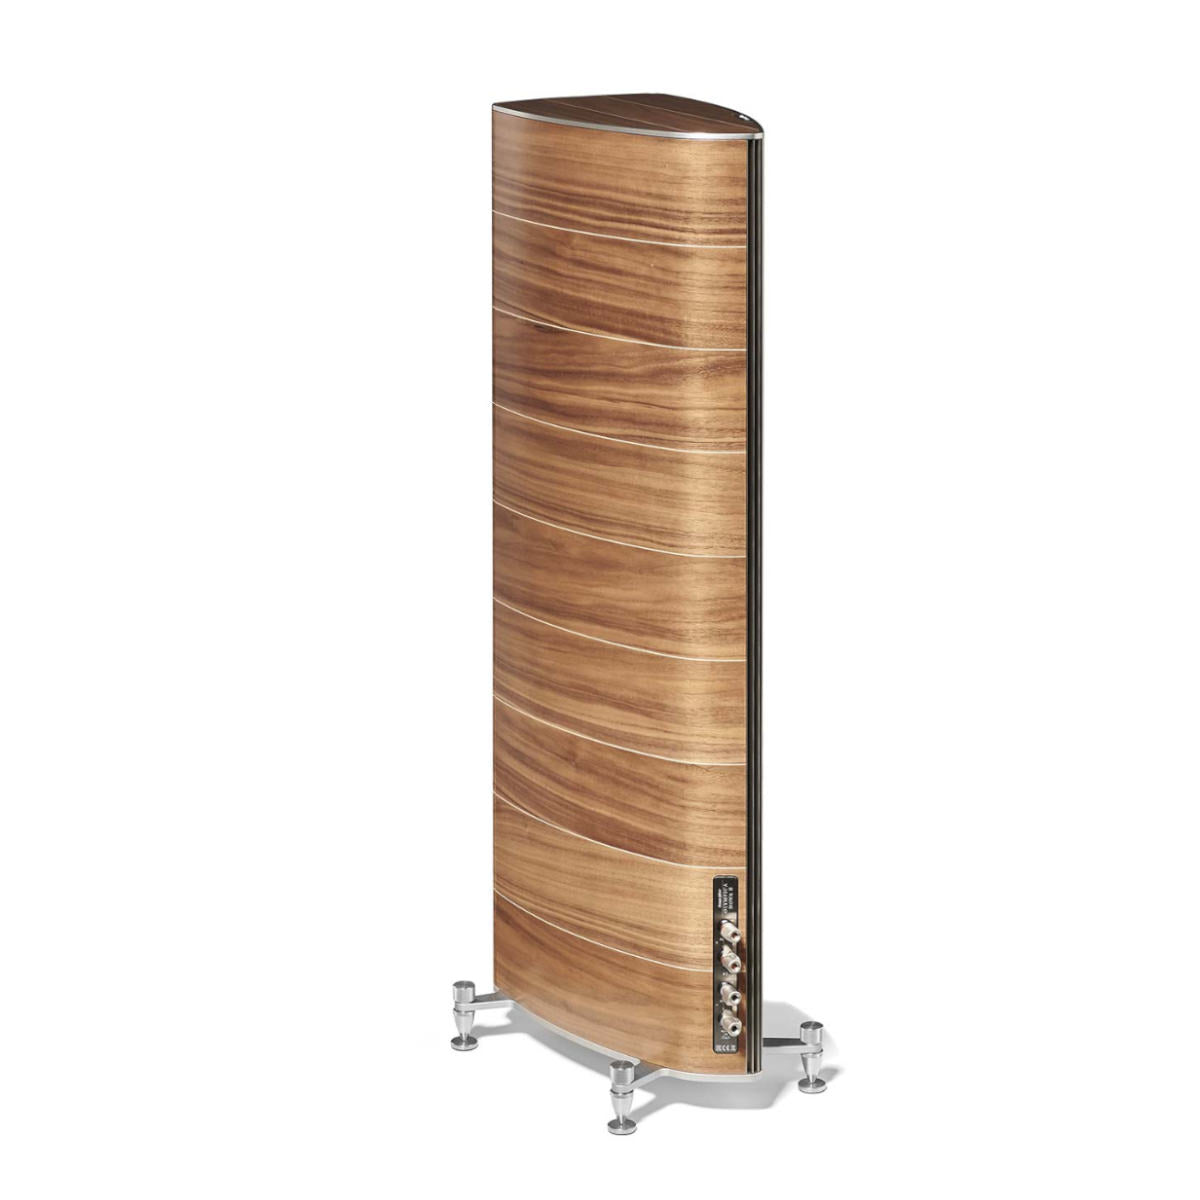 Sonus faber Olympica Nova II Floorstanding Speaker (Walnut) - Rear View